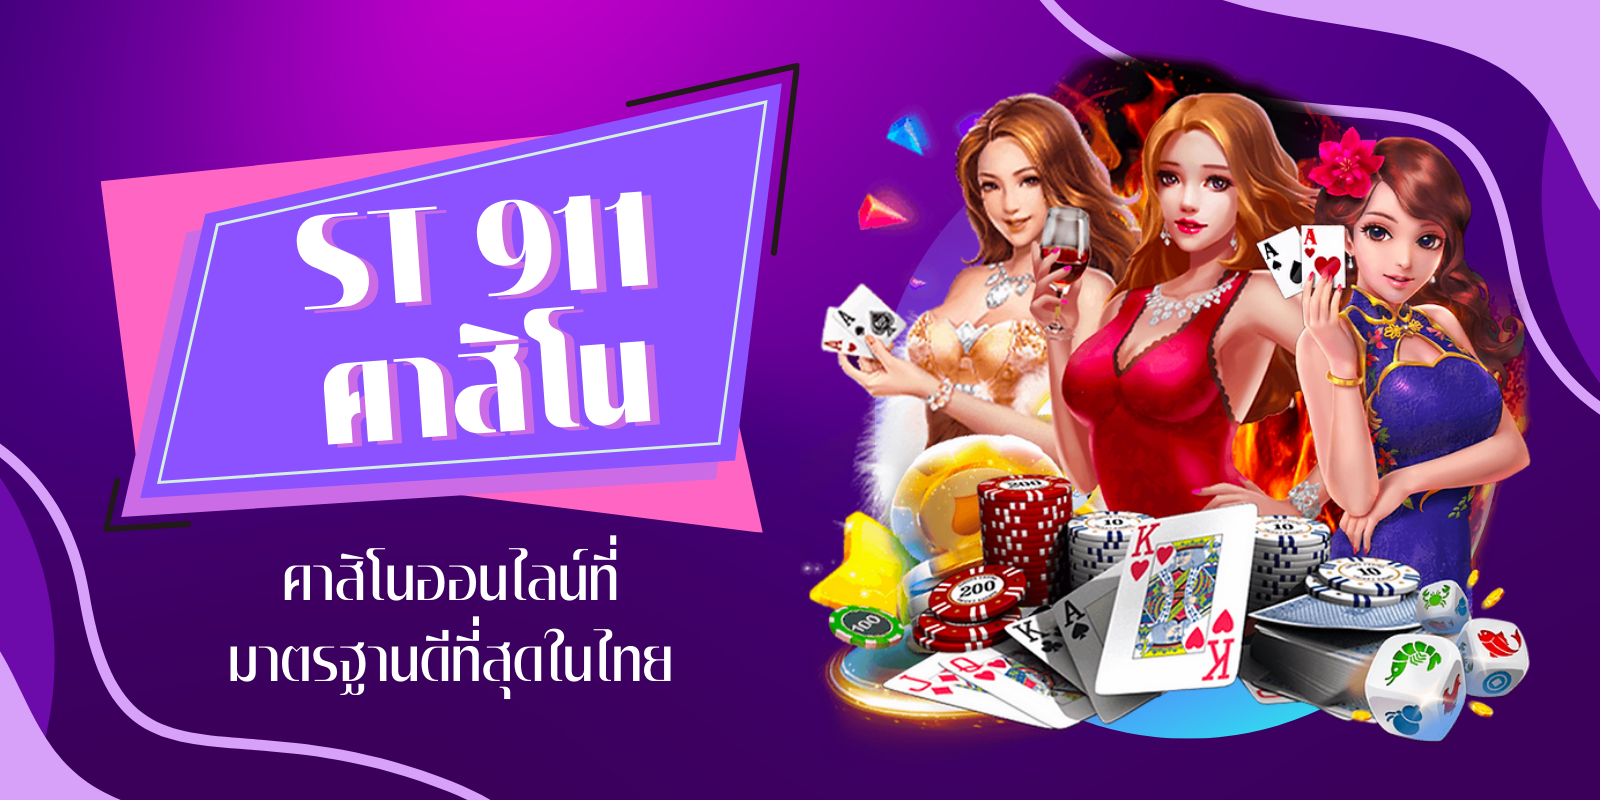 st 911 คาสิโน คาสิโนออนไลน์ที่มาตรฐานดีที่สุดในไทย